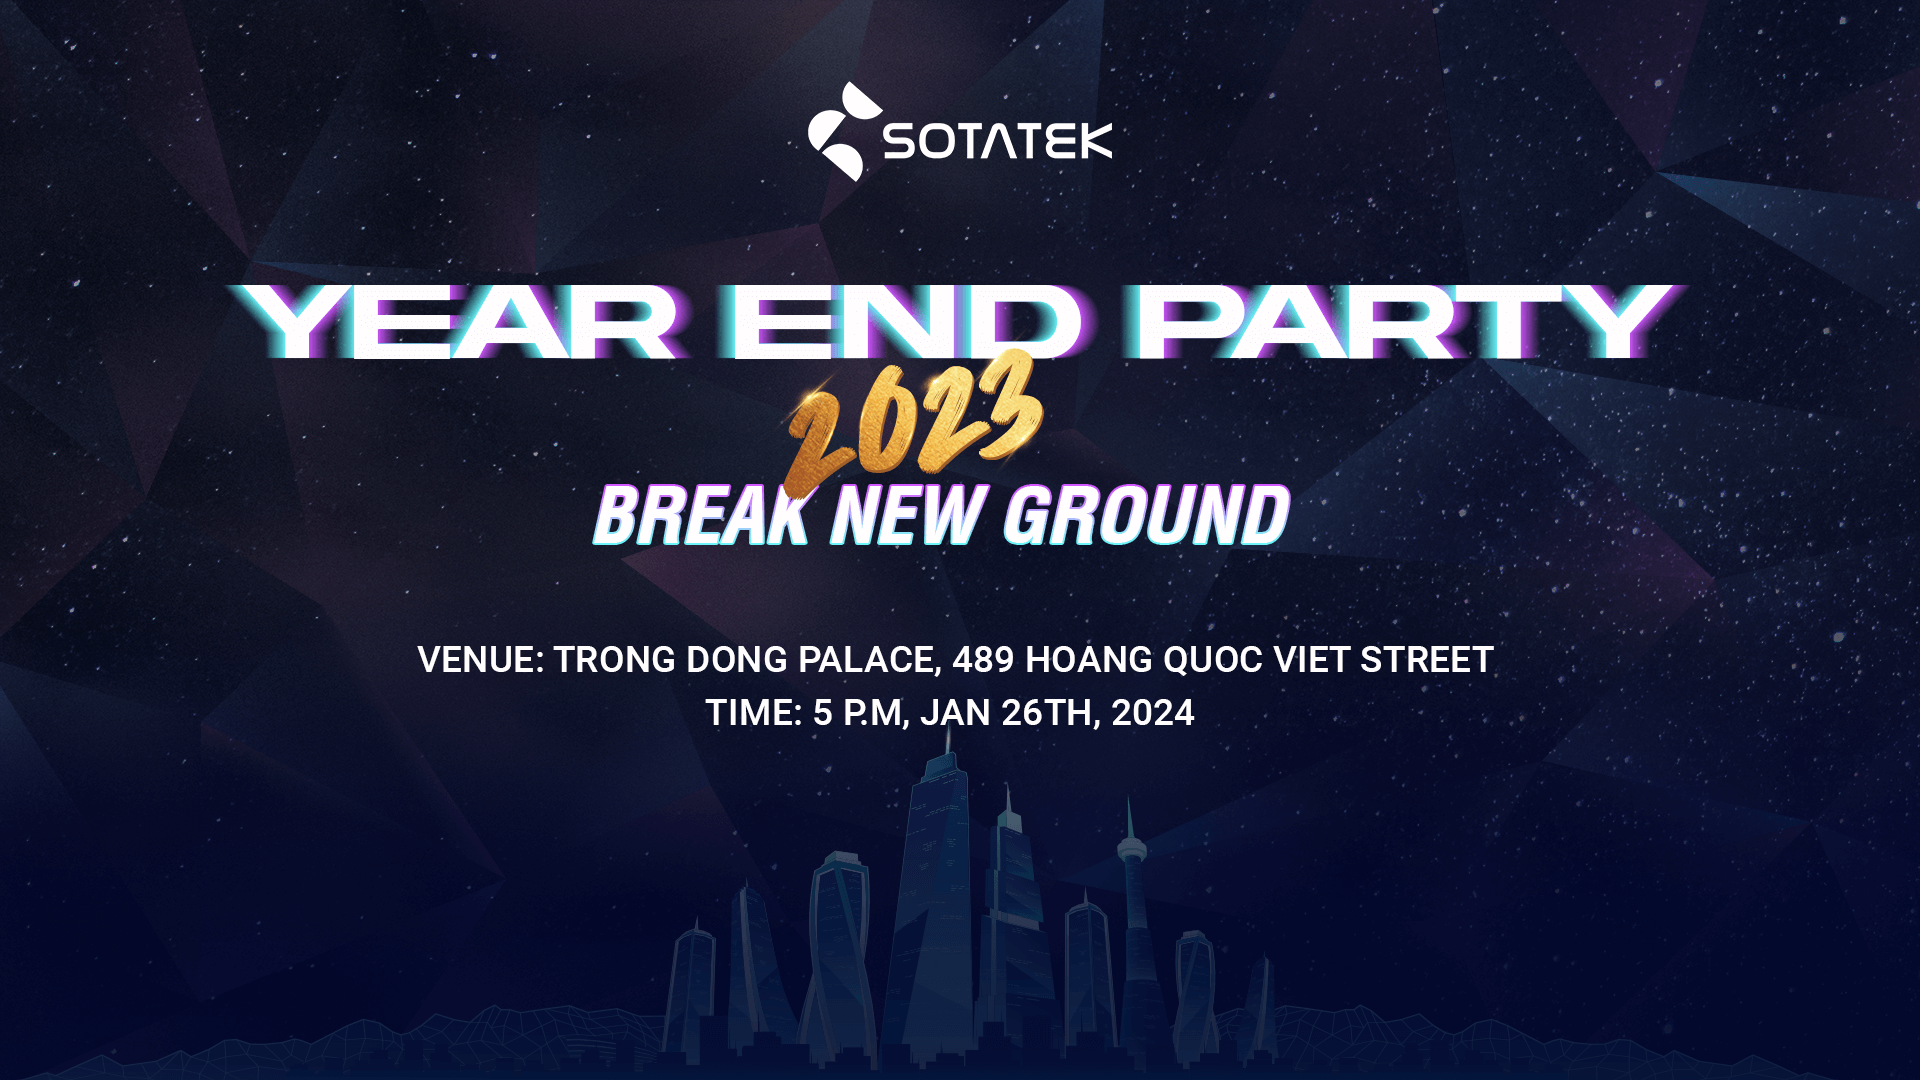 SotaTek Year End Party 2023 - Break New Ground